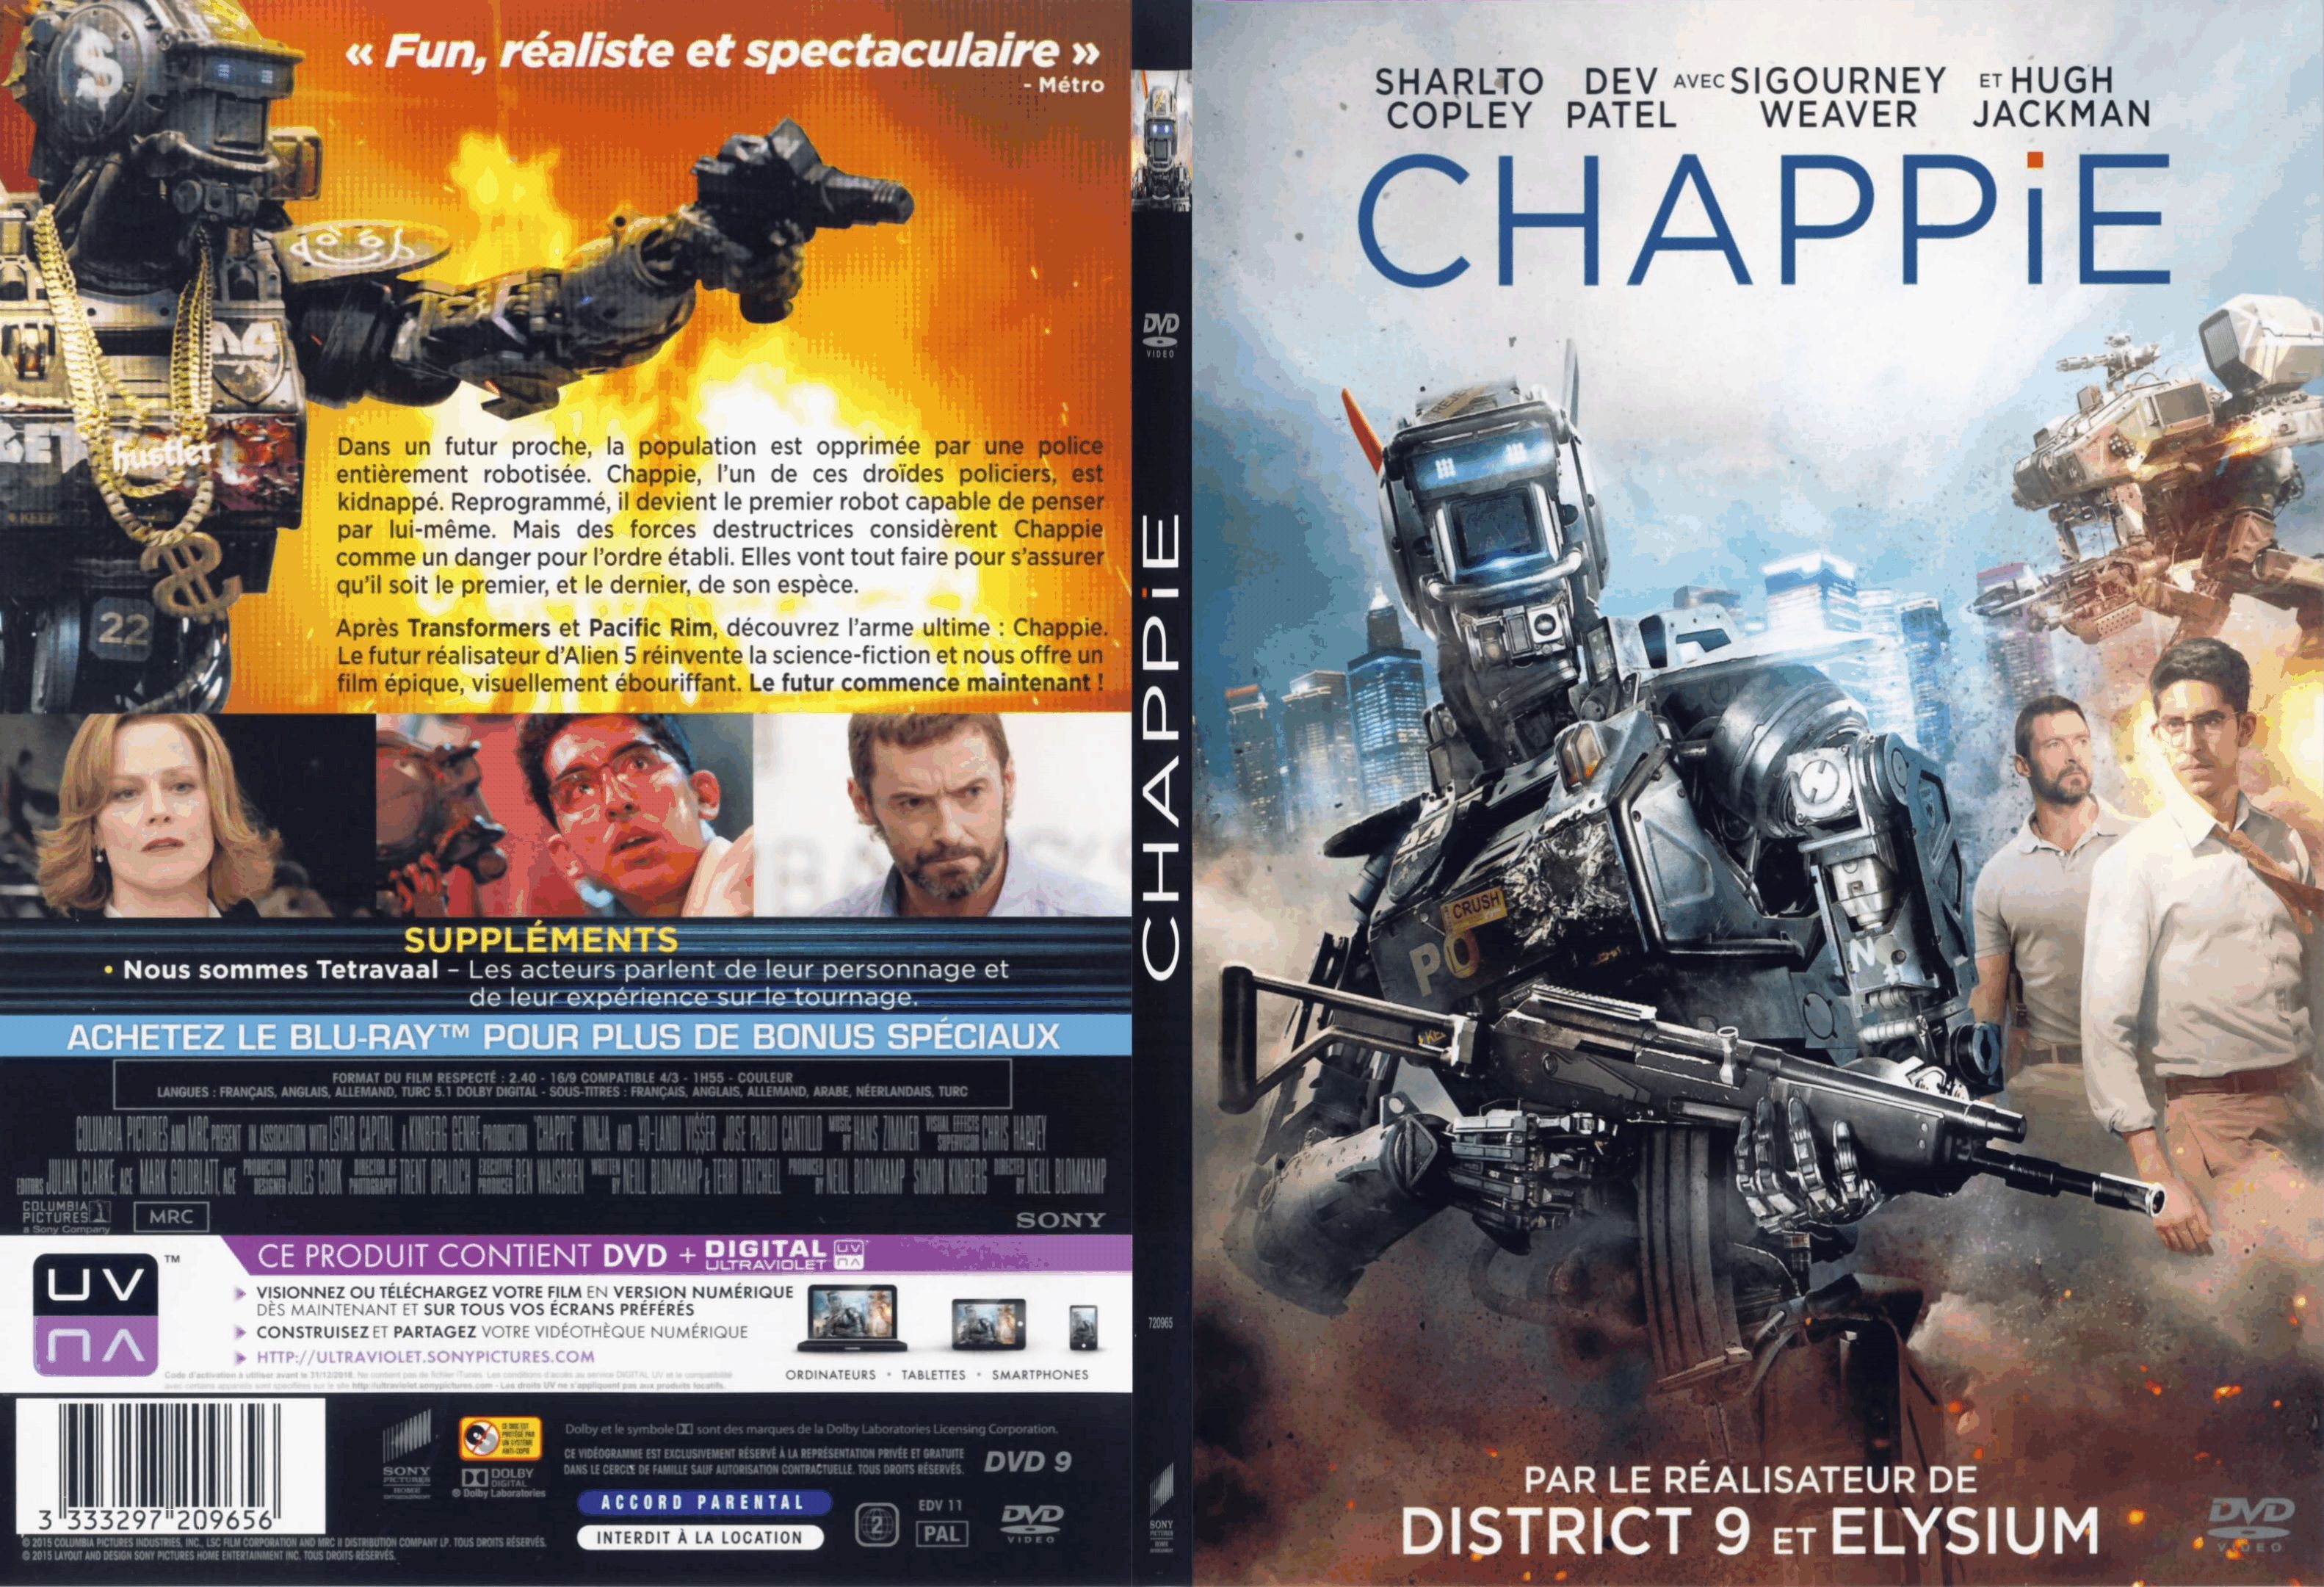 Jaquette DVD Chappie - SLIM